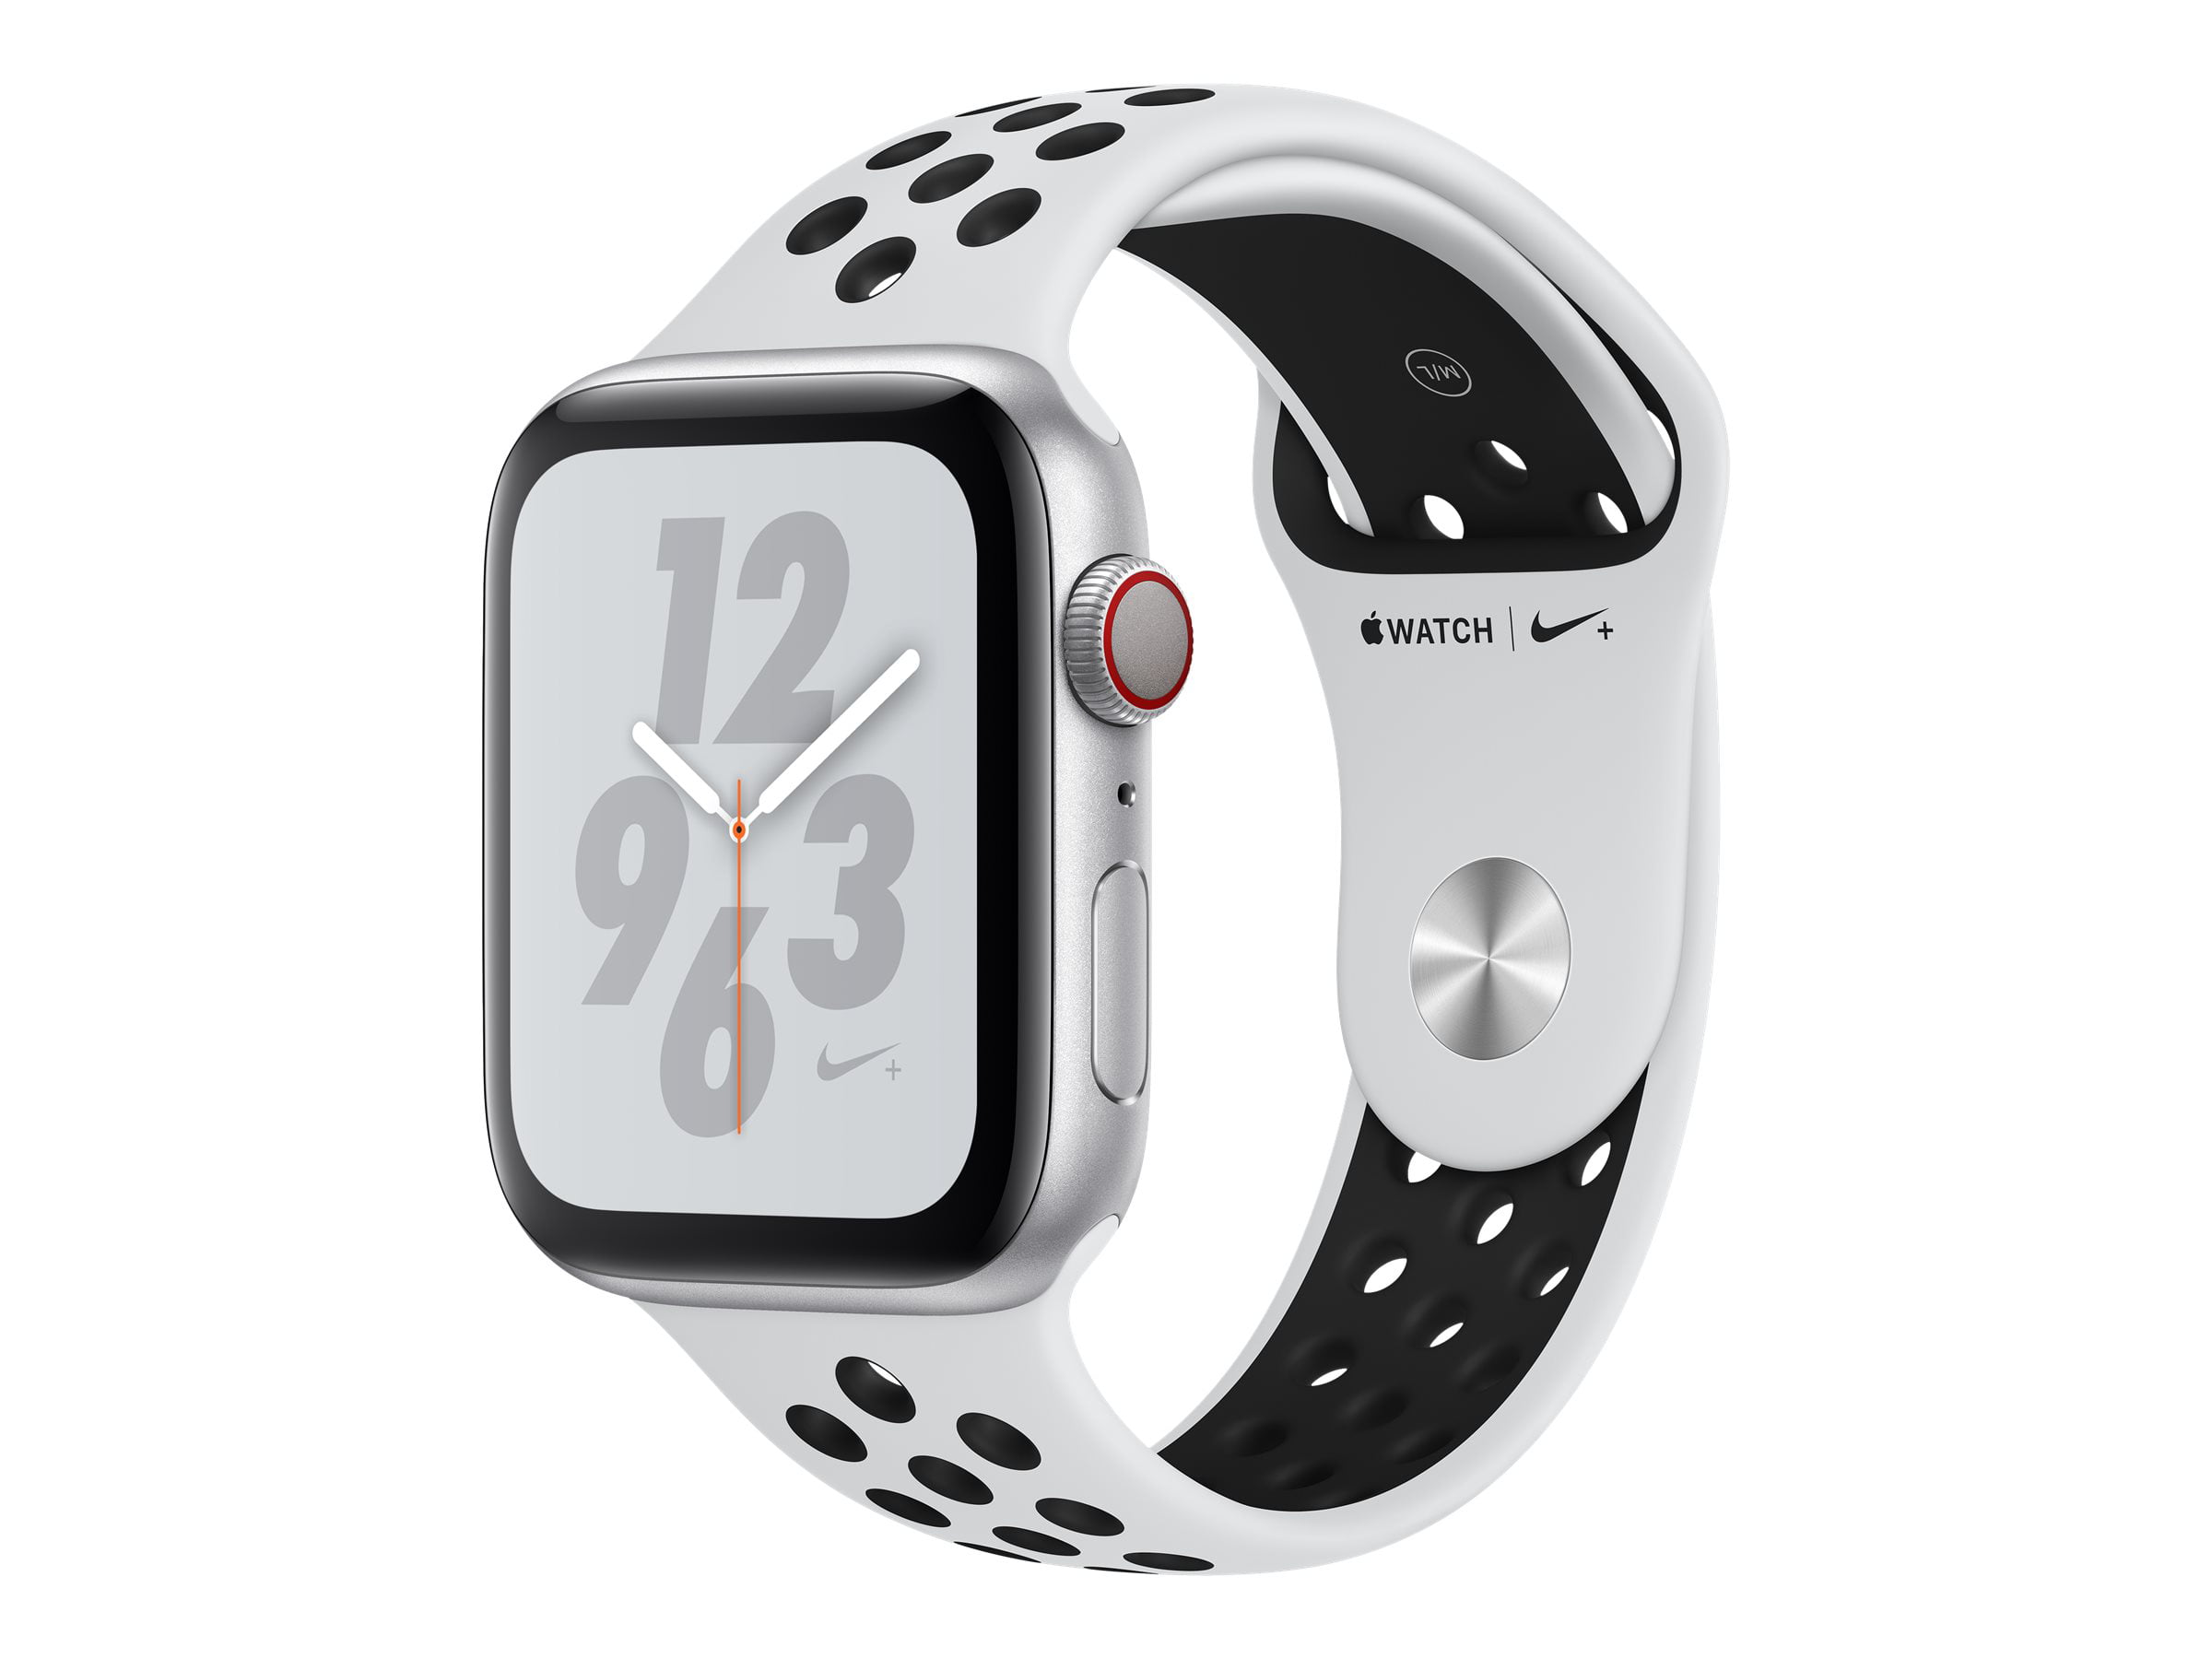 Apple Watch Nike+ Series 4 (GPS) - 40 mm - space gray aluminum 